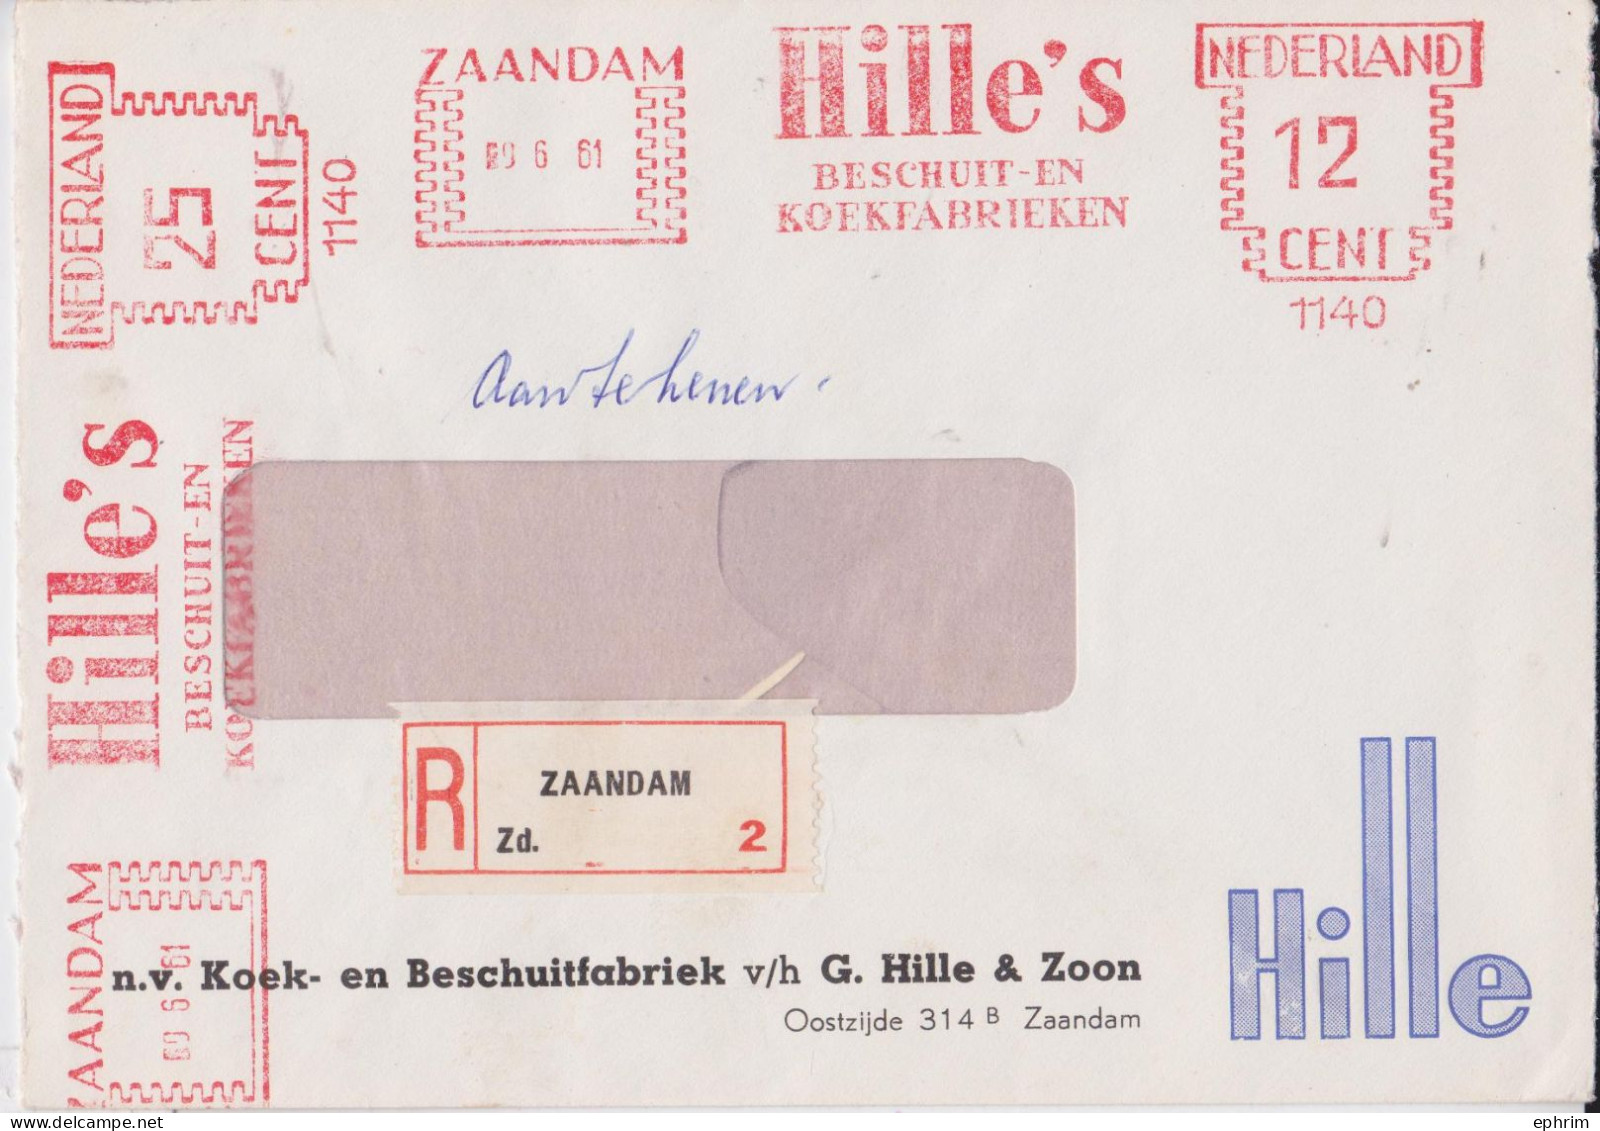 Zaandam Hille's Nederland Ema Red Meter Machine Mail Stampless Registered Cover Lettre Affranchissement Mécanique 1961 - Macchine Per Obliterare (EMA)